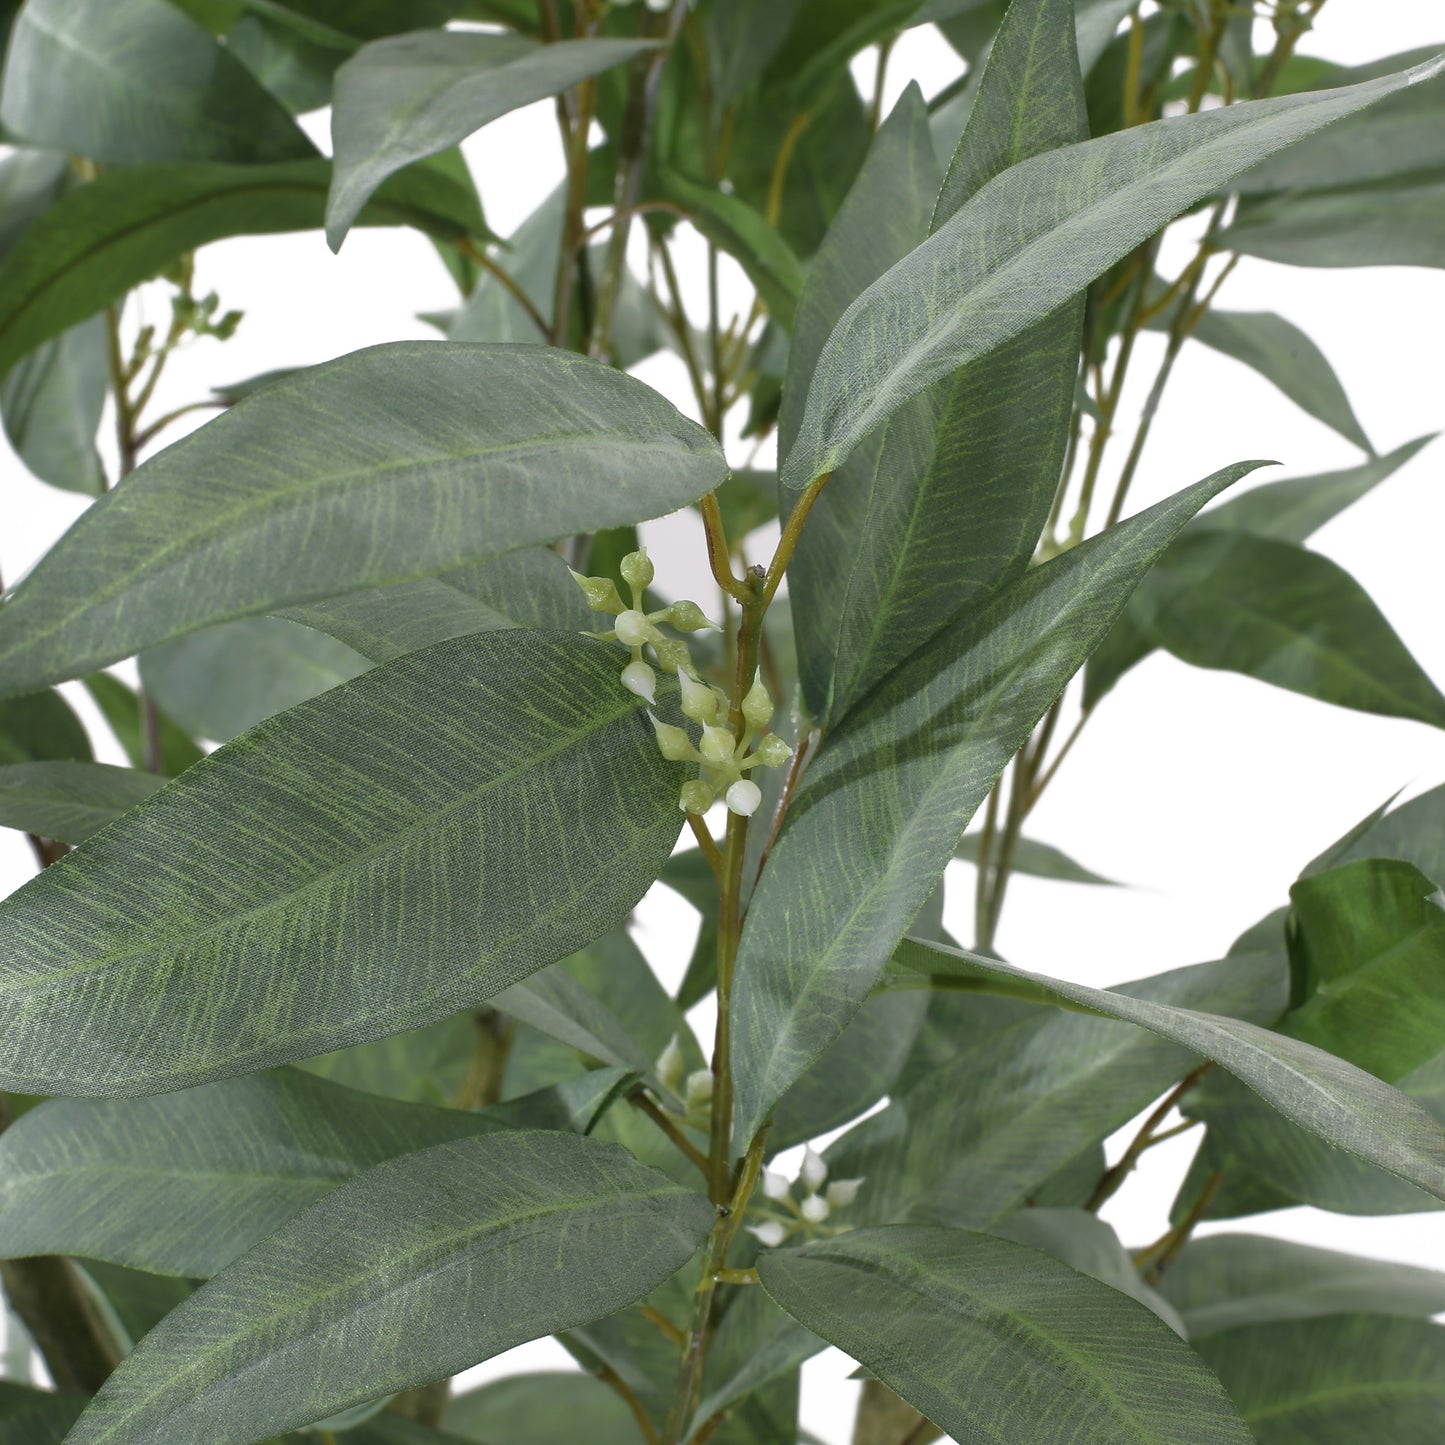 Bowrun Artificial Eucalyptus Leaf Tree